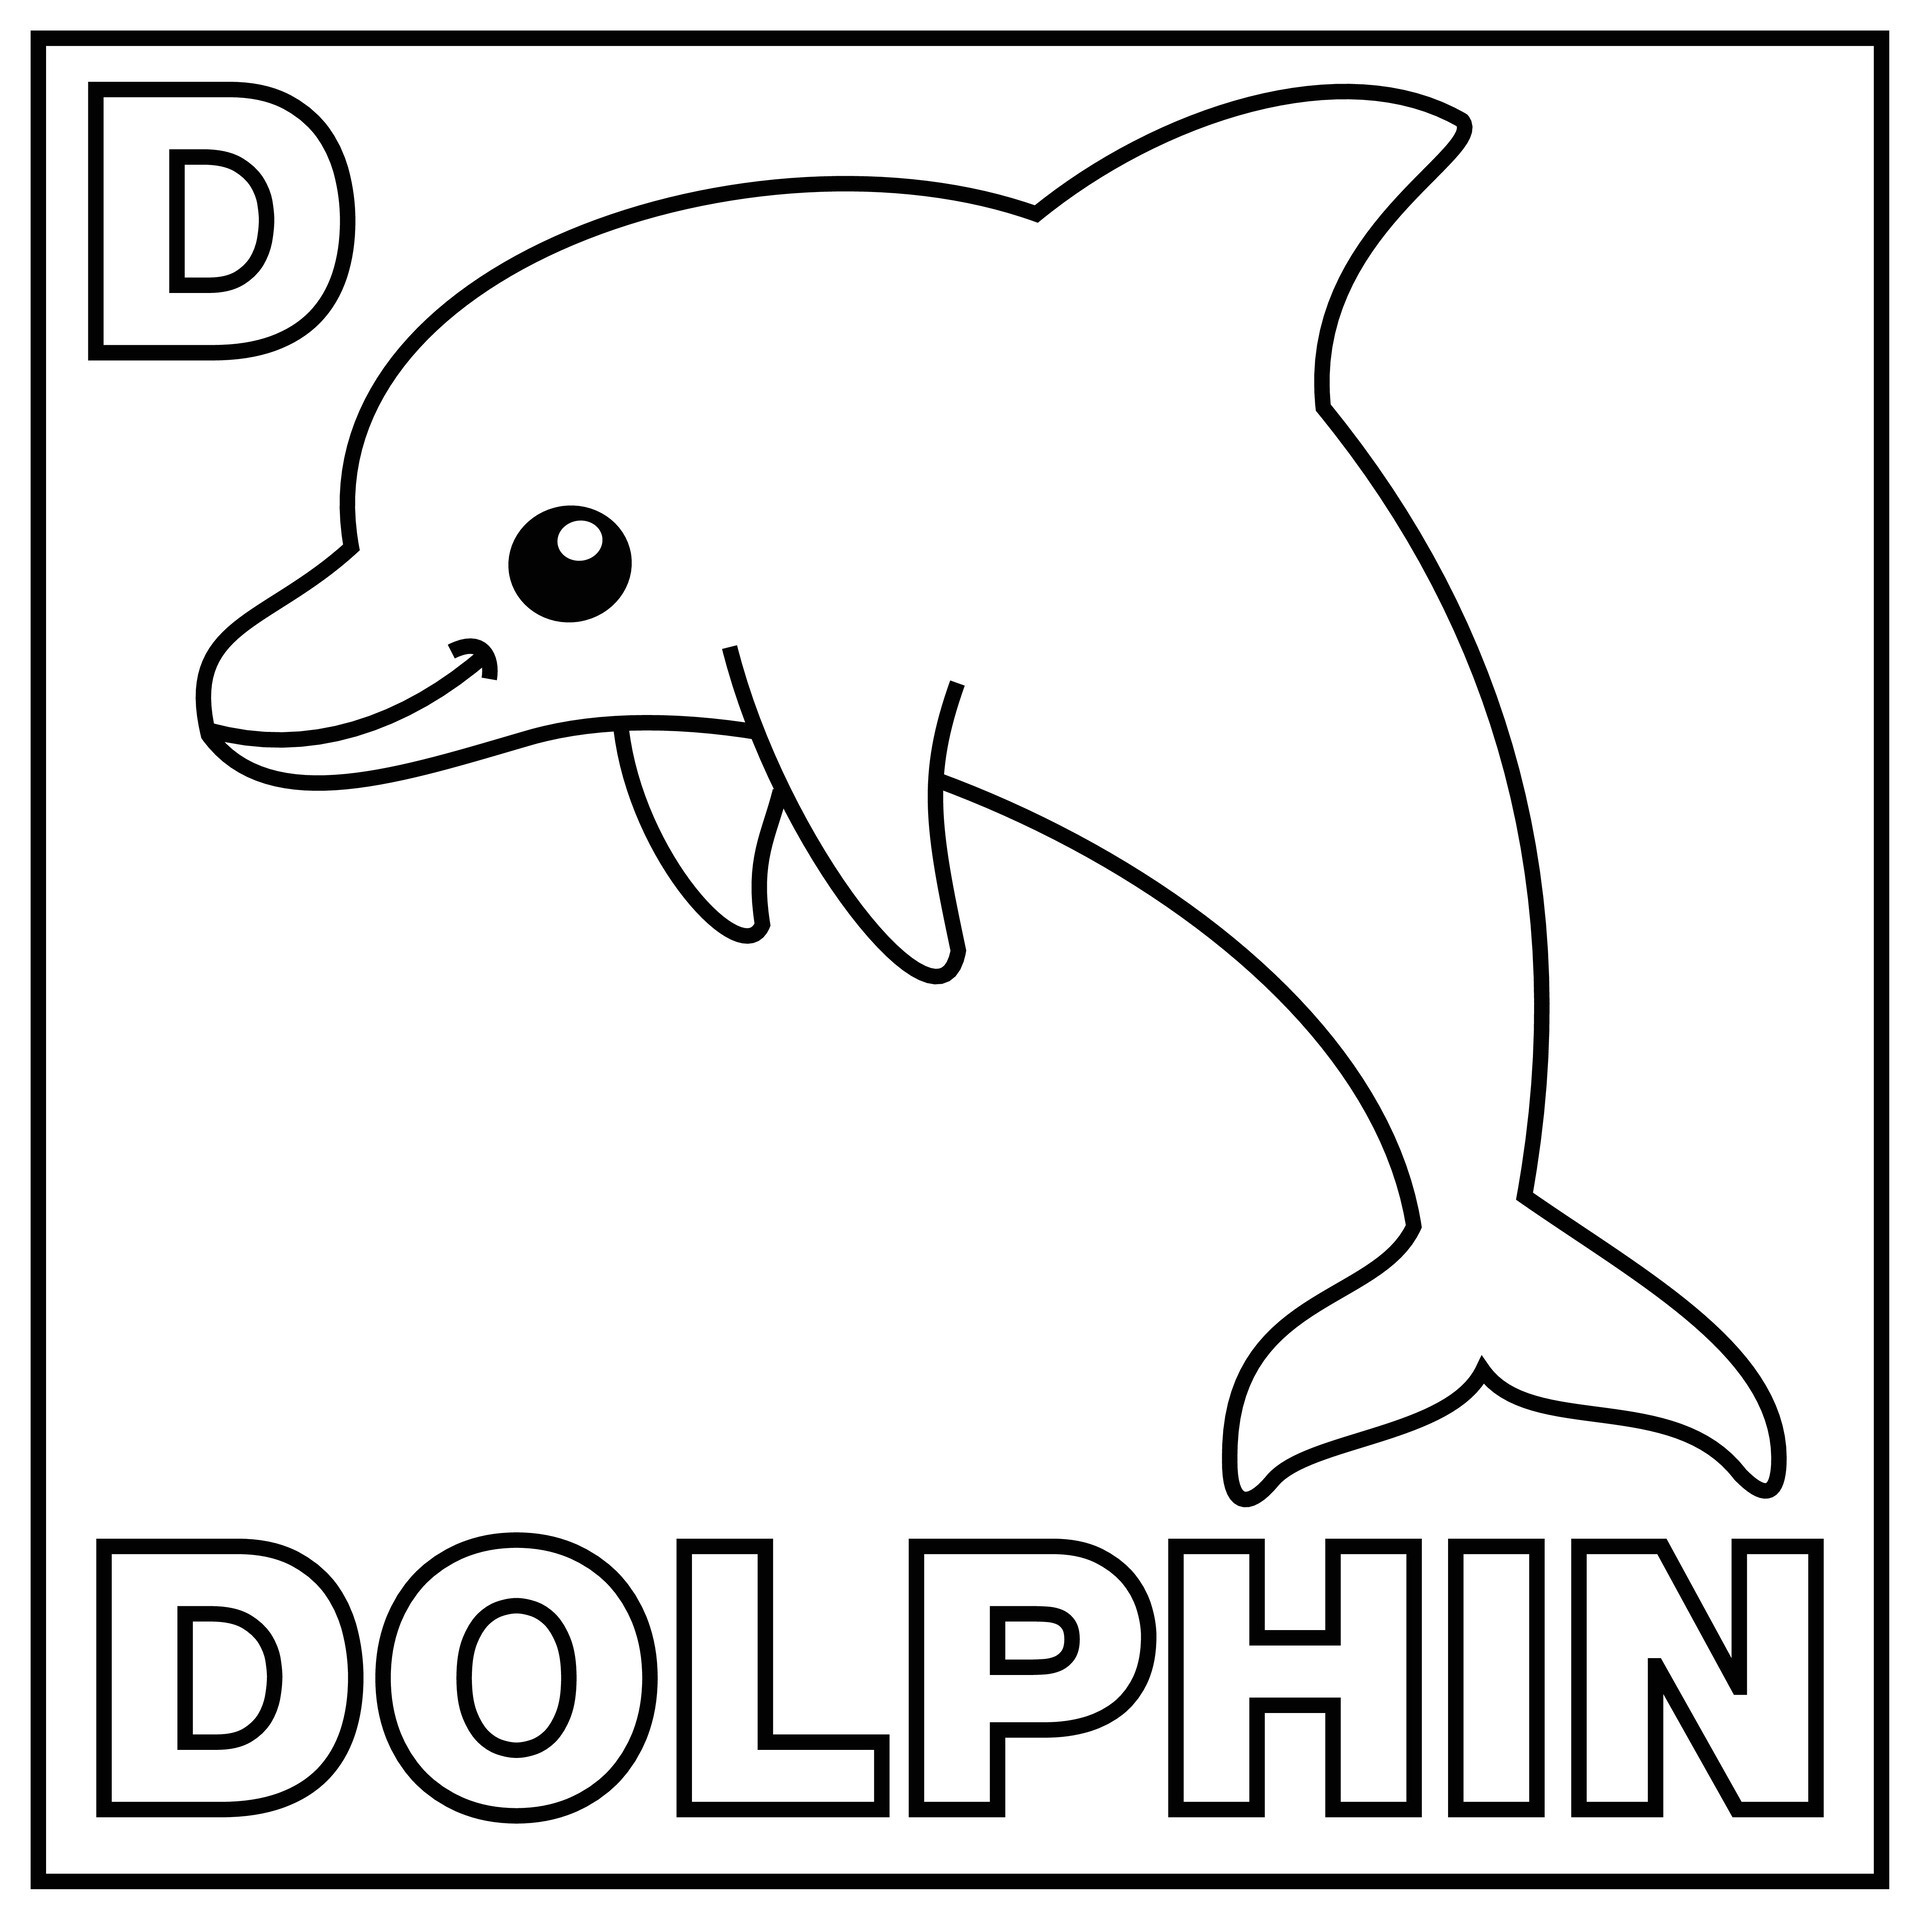 Coloring book for children. Alphabet d dolphin. Vector illustration ...